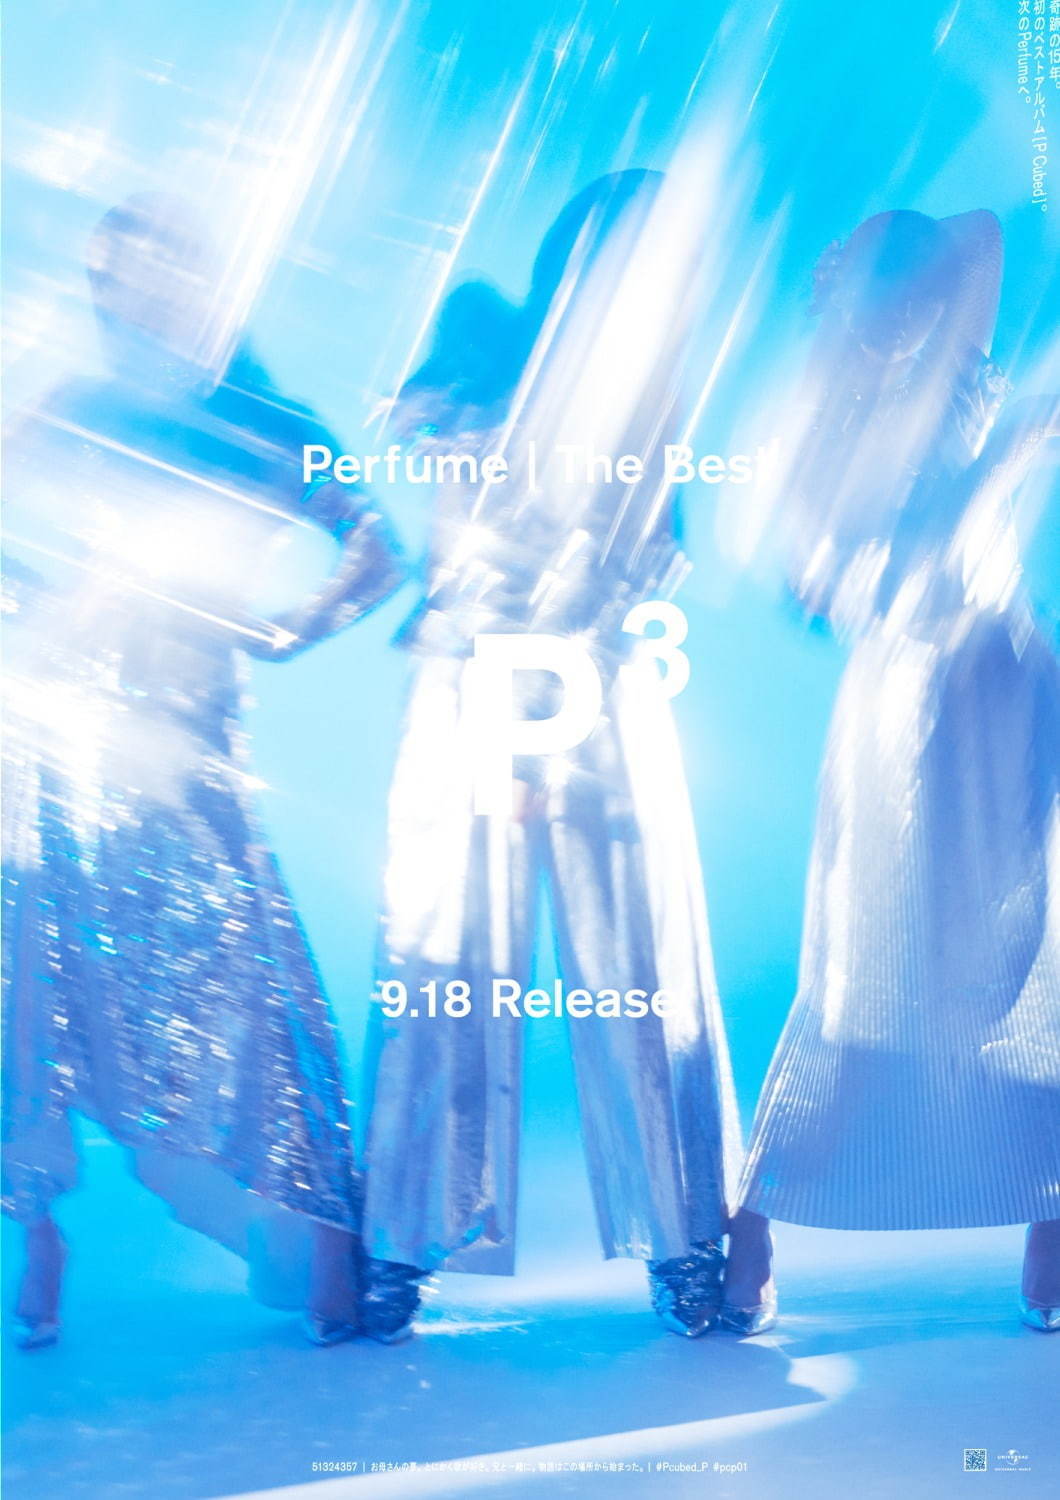 Perfume初ベストアルバム P Cubed デビューからの全52曲 4大ドームツアー開催も ファッションプレス